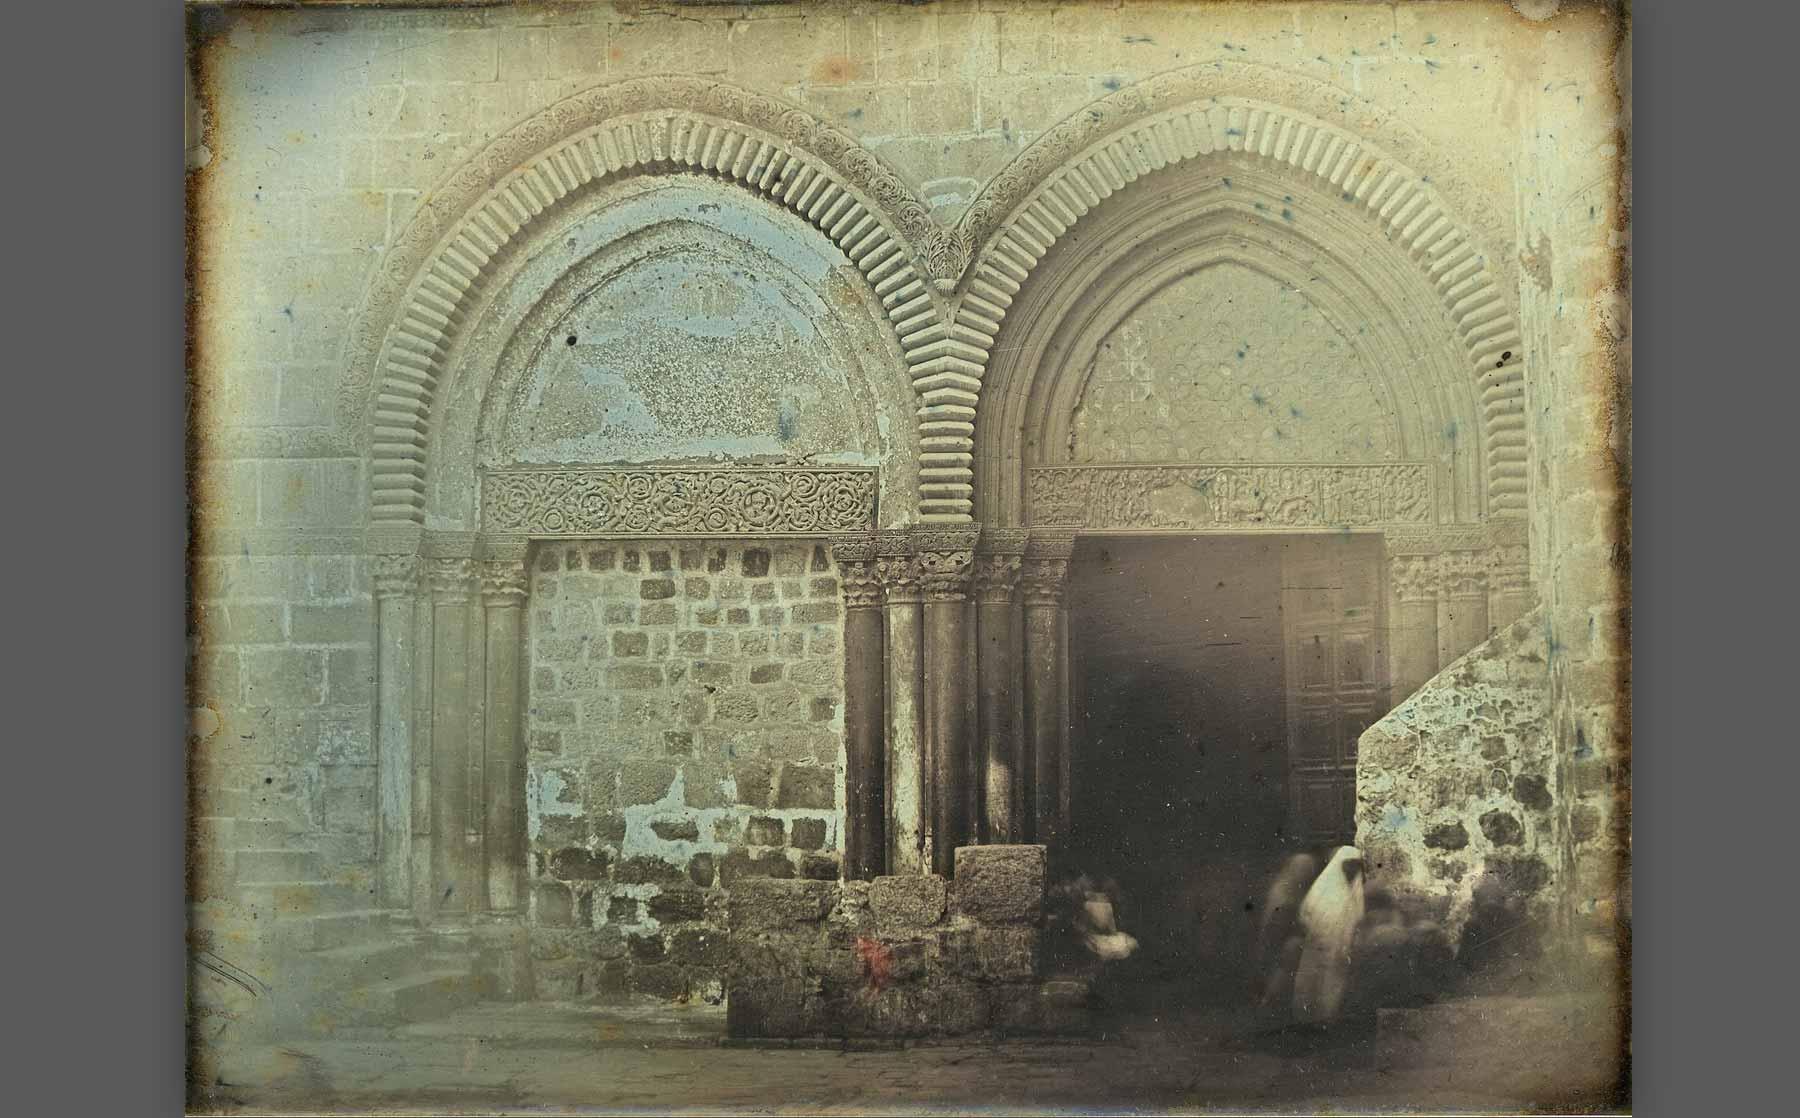 Girault de Prangey, “Portal, Church of the Holy Sepulchre, Jerusalem” (1844), daguerreotype.